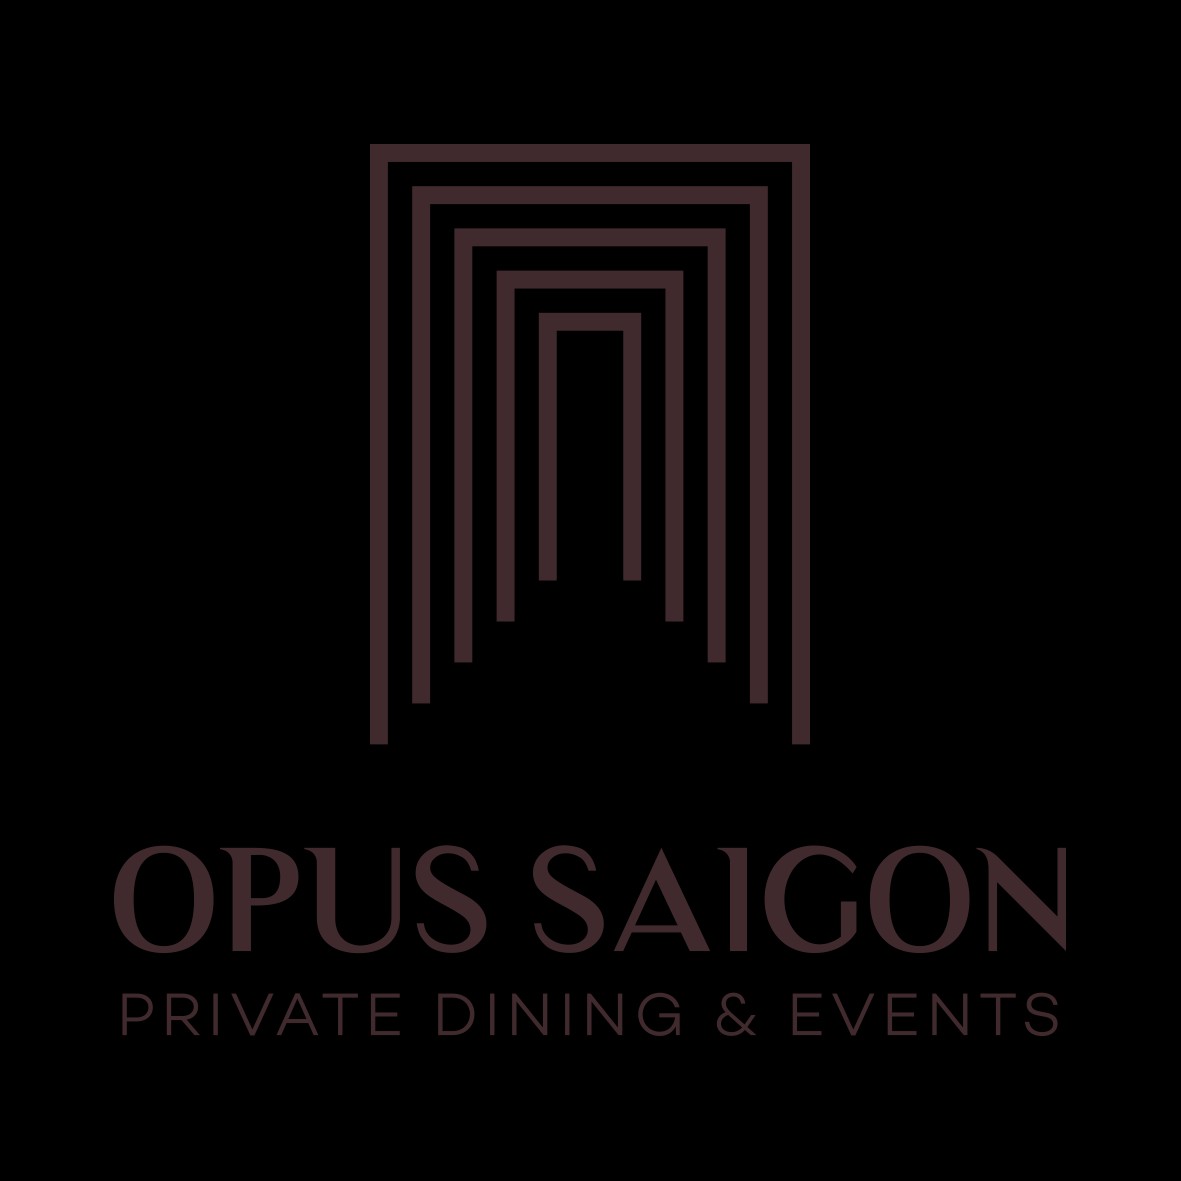 Oriental Saigon (Opus Saigon - Hoi An Sense - Mandarine Restaurants) 